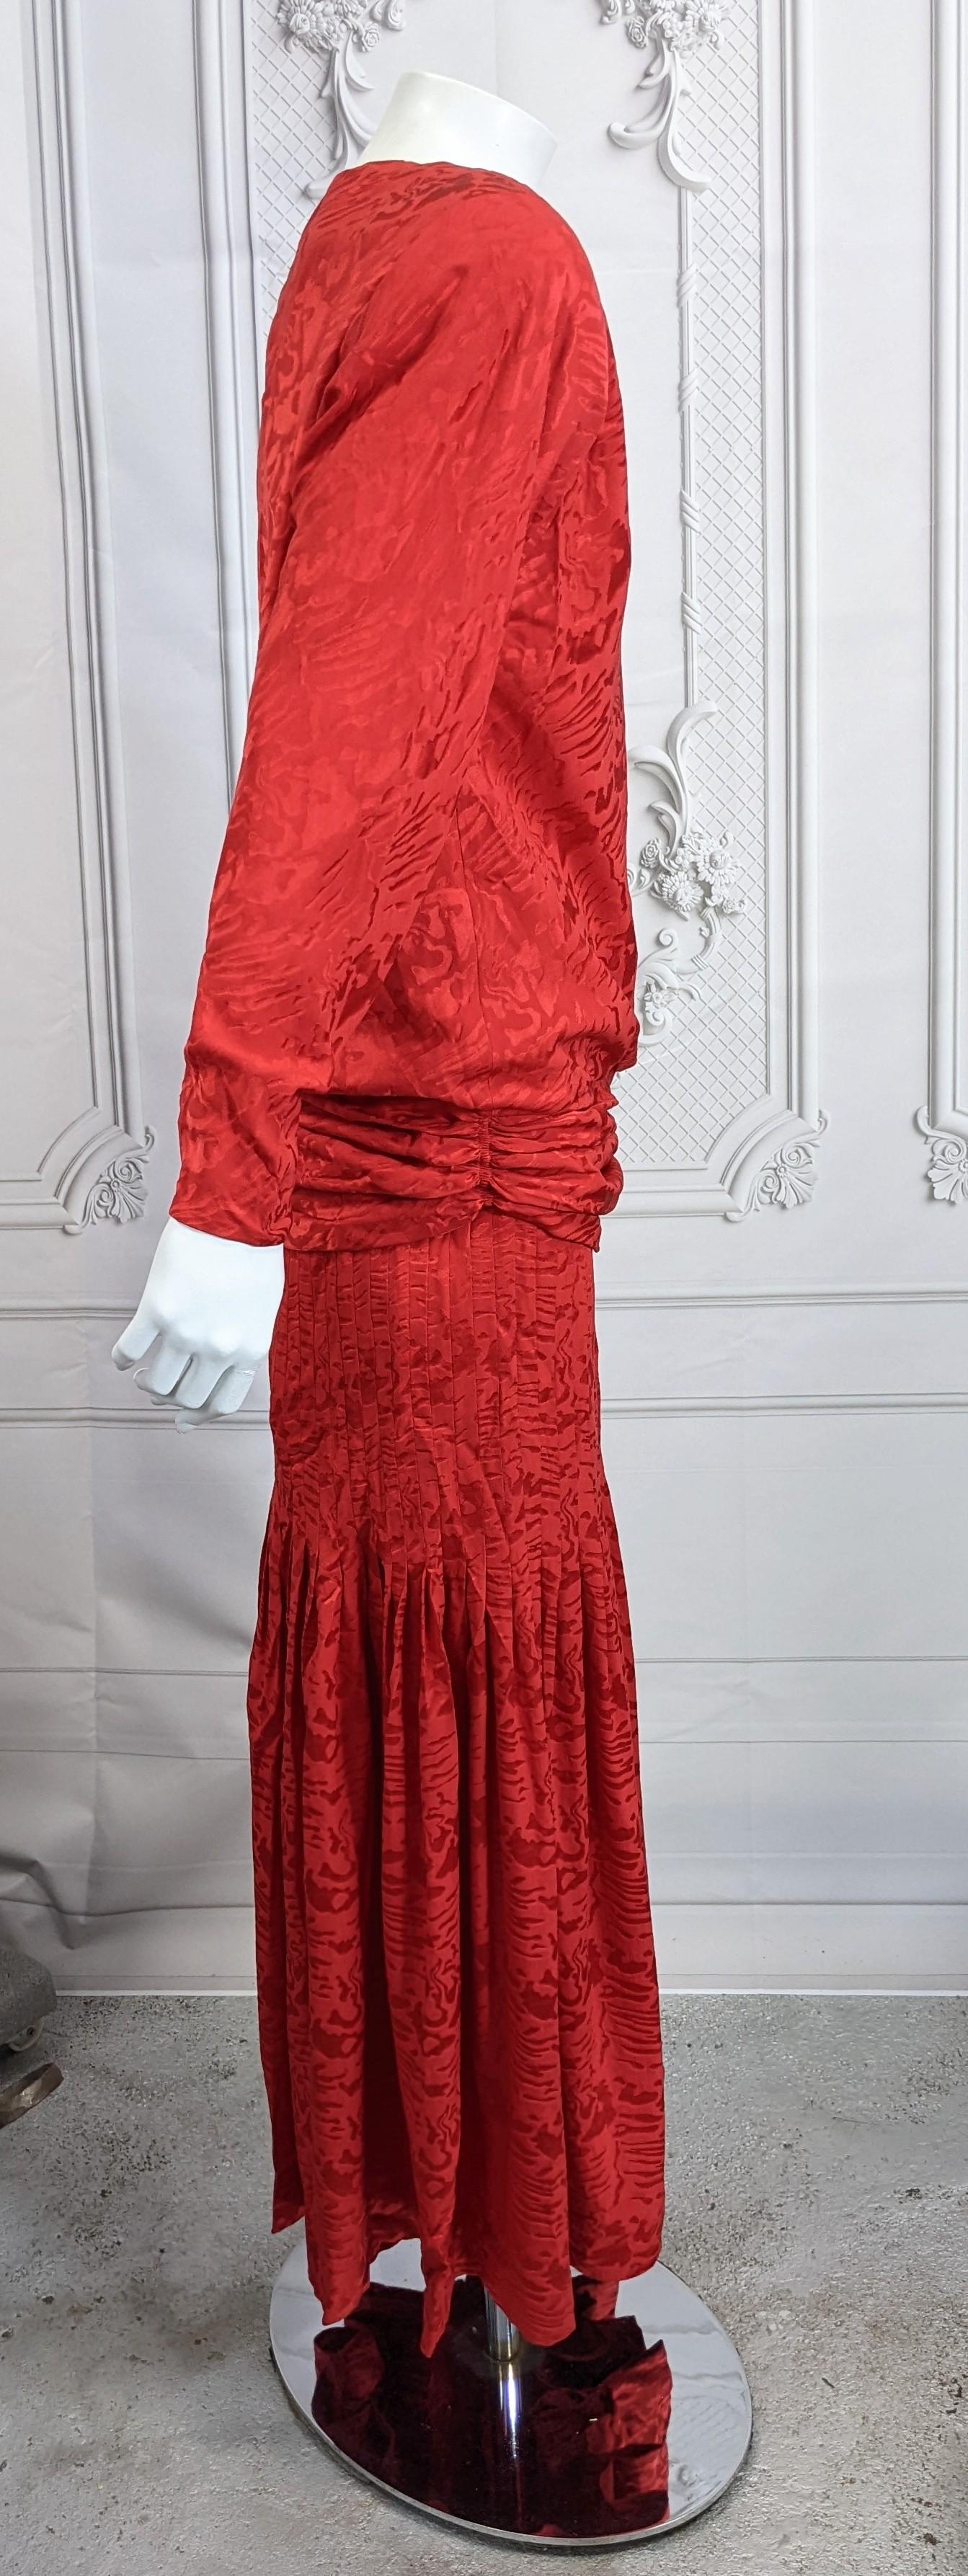 Women's Oscar de la Renta Silk Jacquard Evening Gown For Sale